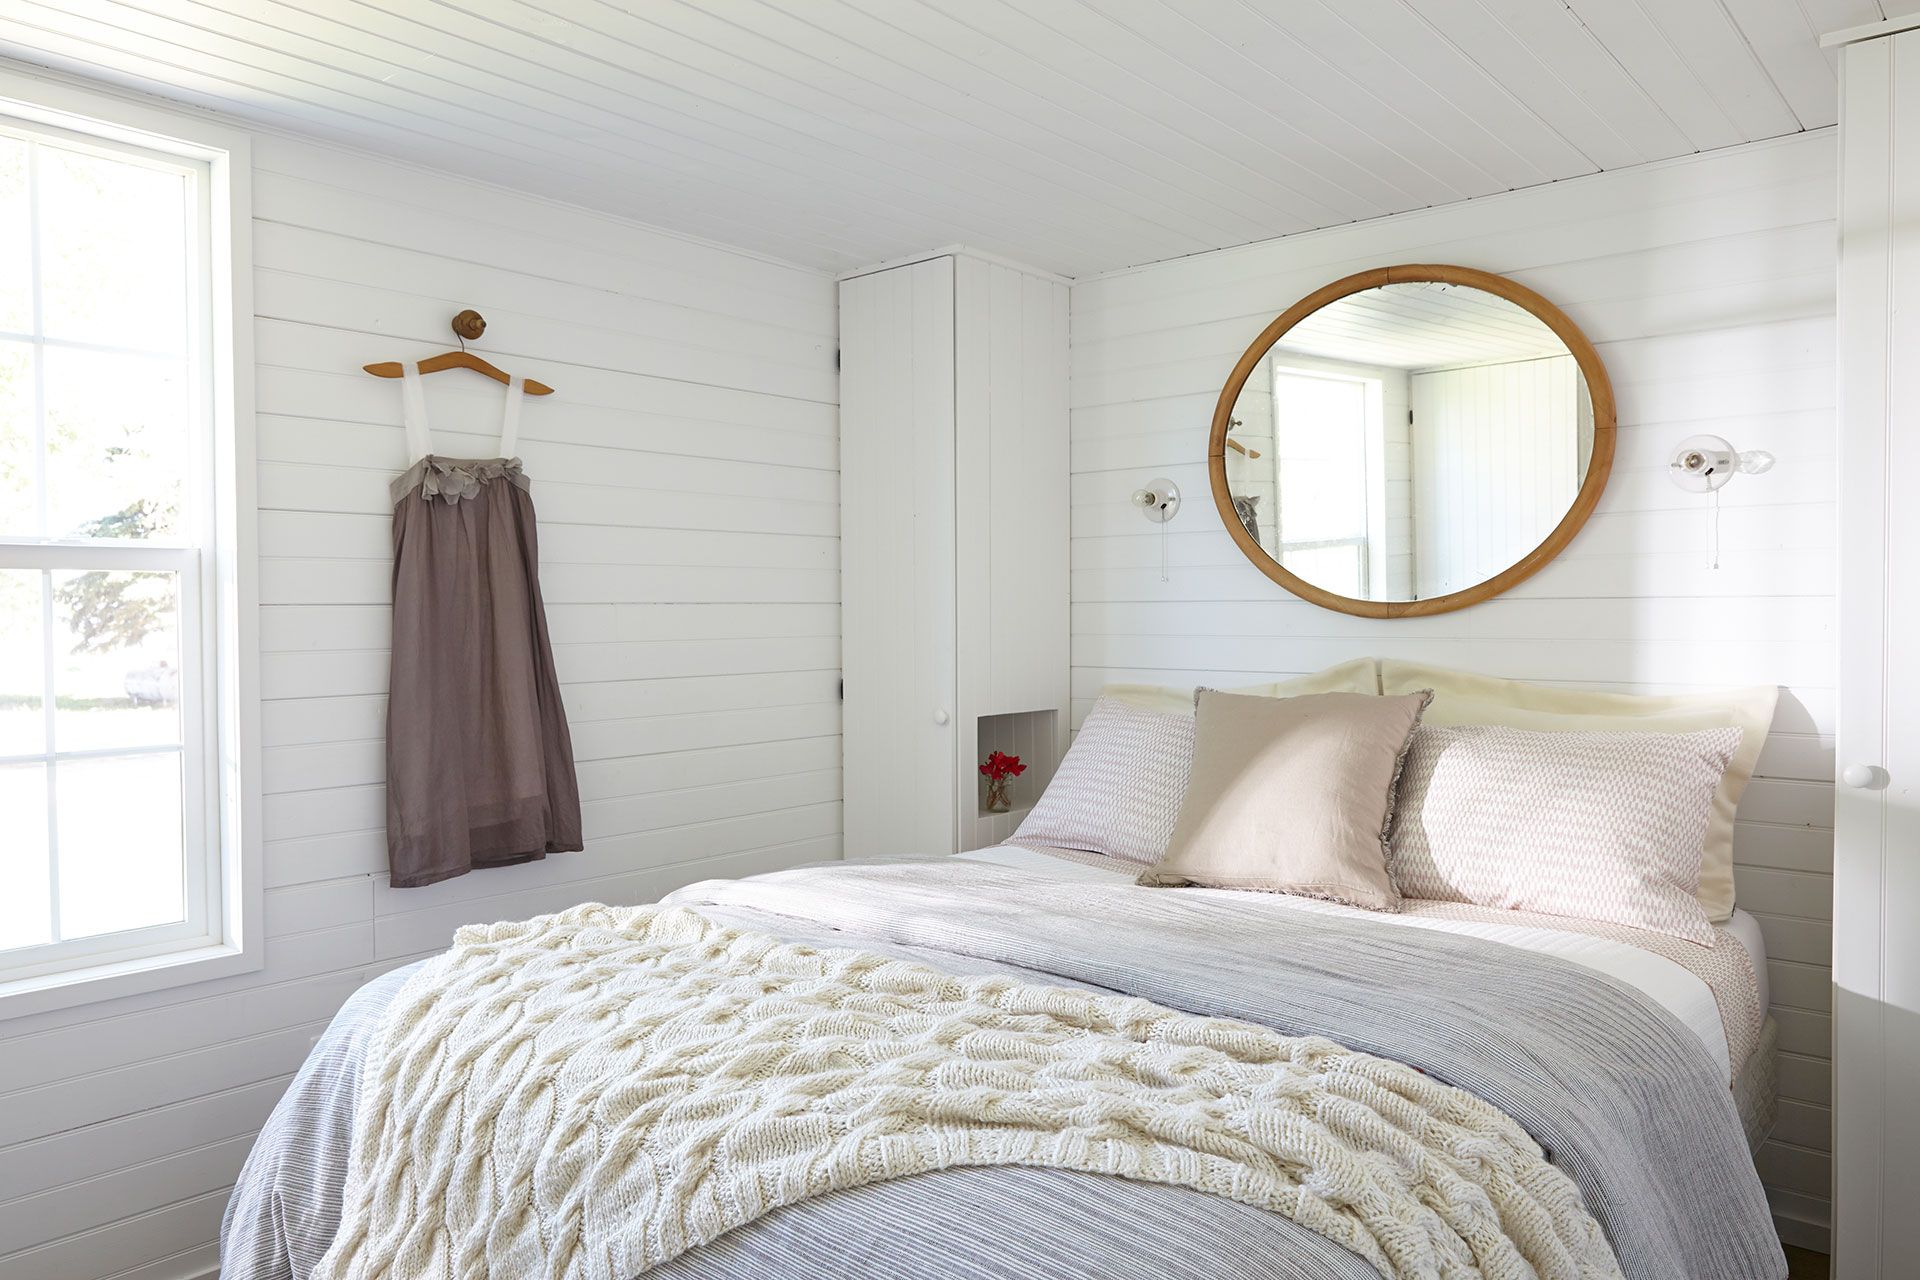 Small apartment bedroom ideas